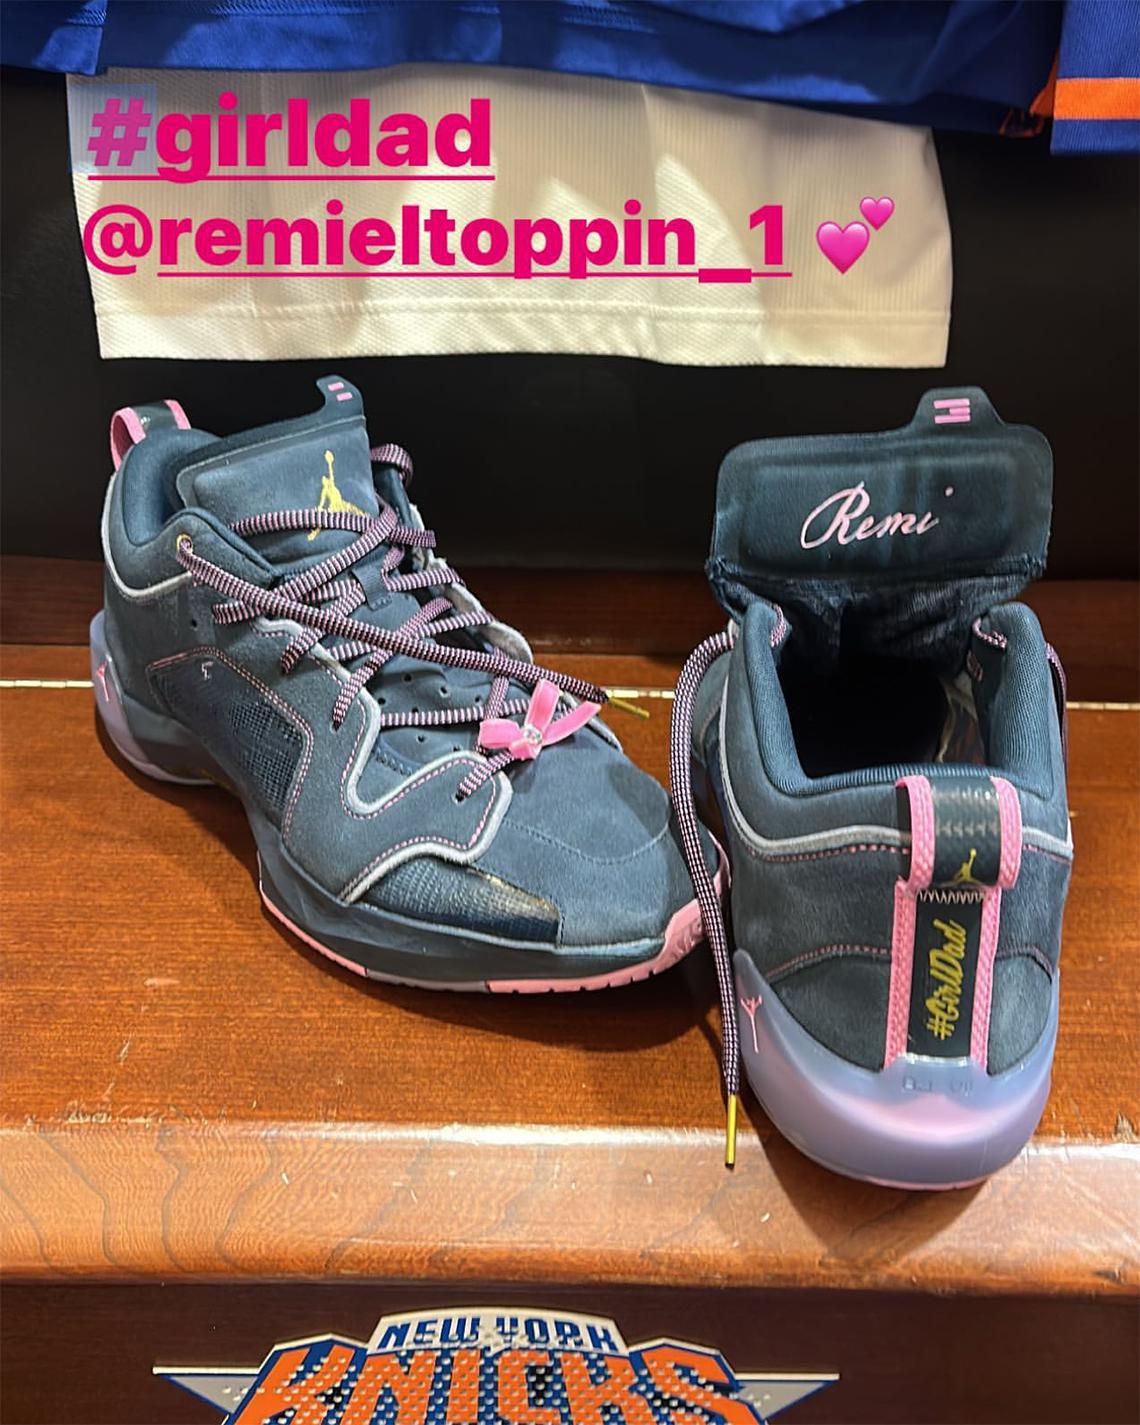 Obi Toppin rend hommage à sa fille Remi avec une Air Jordan 37 Low "Girl Dad" PE